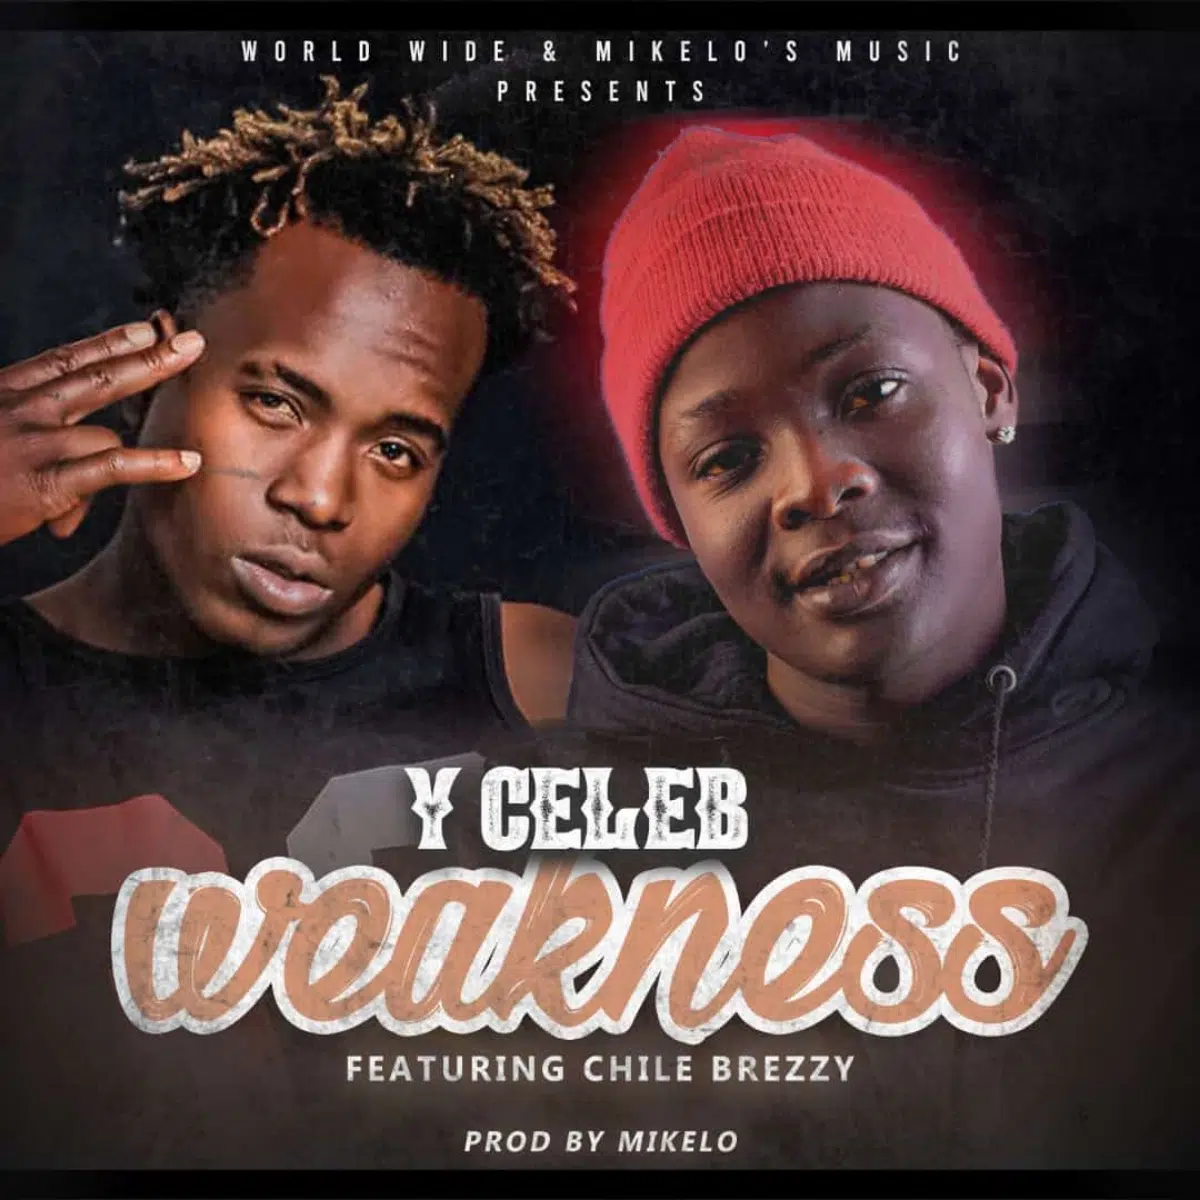 DOWNLOAD: Y Celeb Feat Chile Breezy – “WeaKness” Mp3